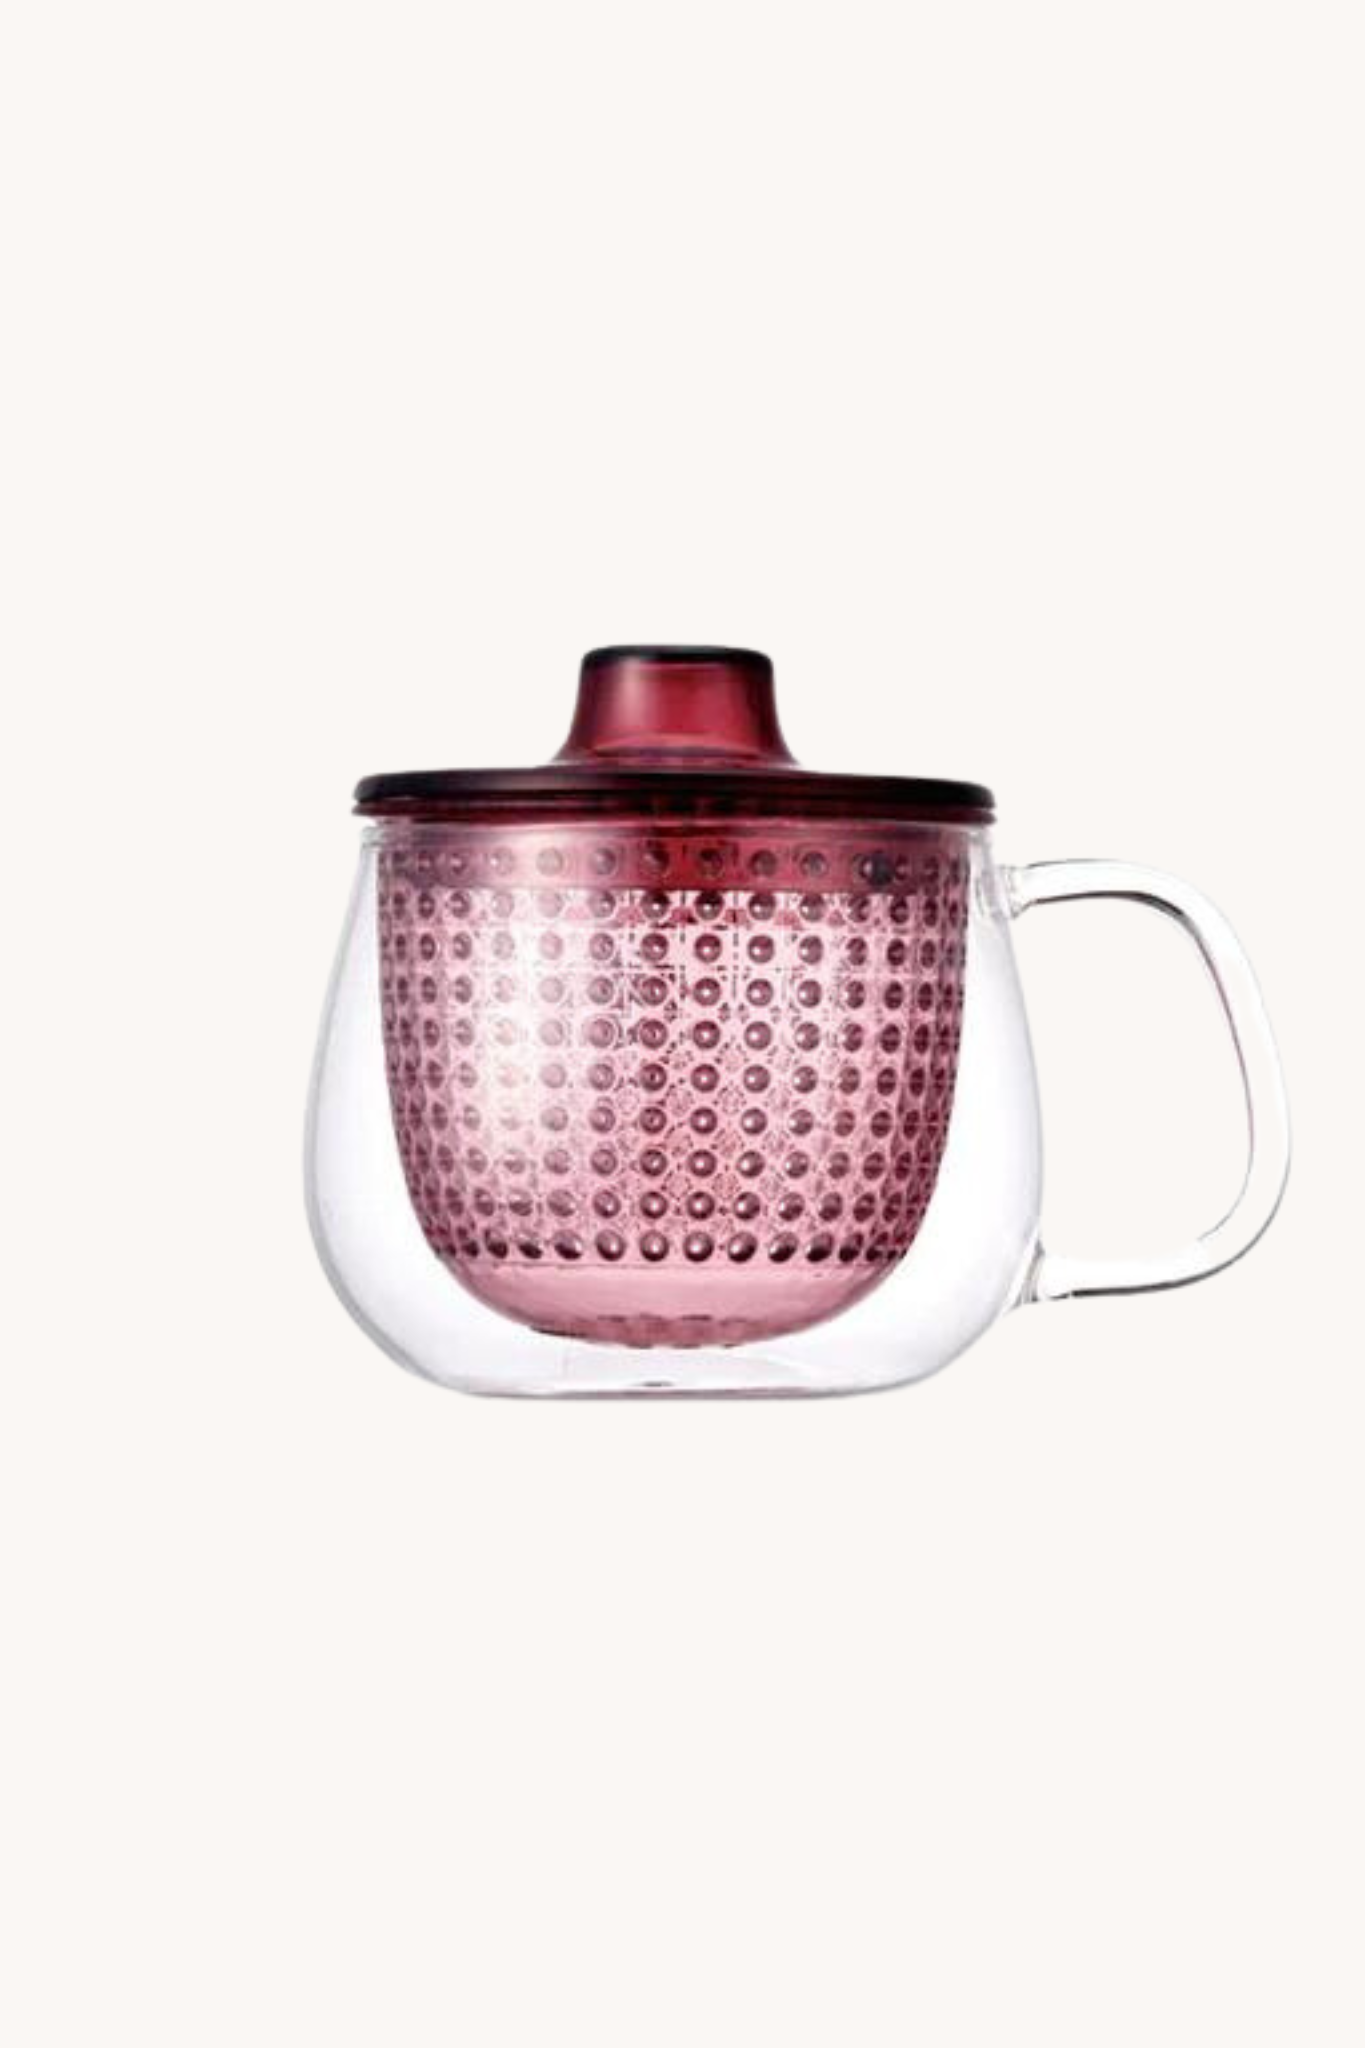 Tea infuser and mug - red